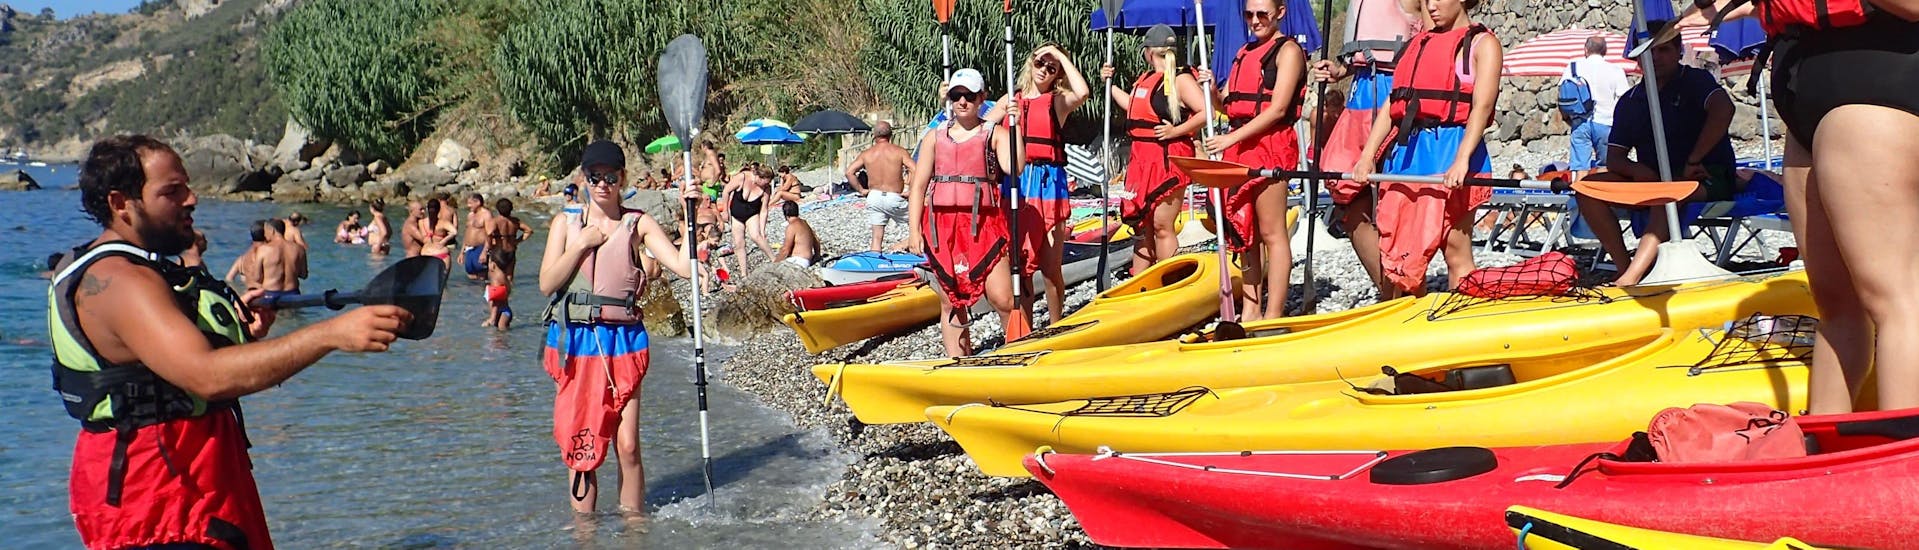 Leichte Kayak & Kanu-Tour in Marina del Cantone - Amalfiküste.